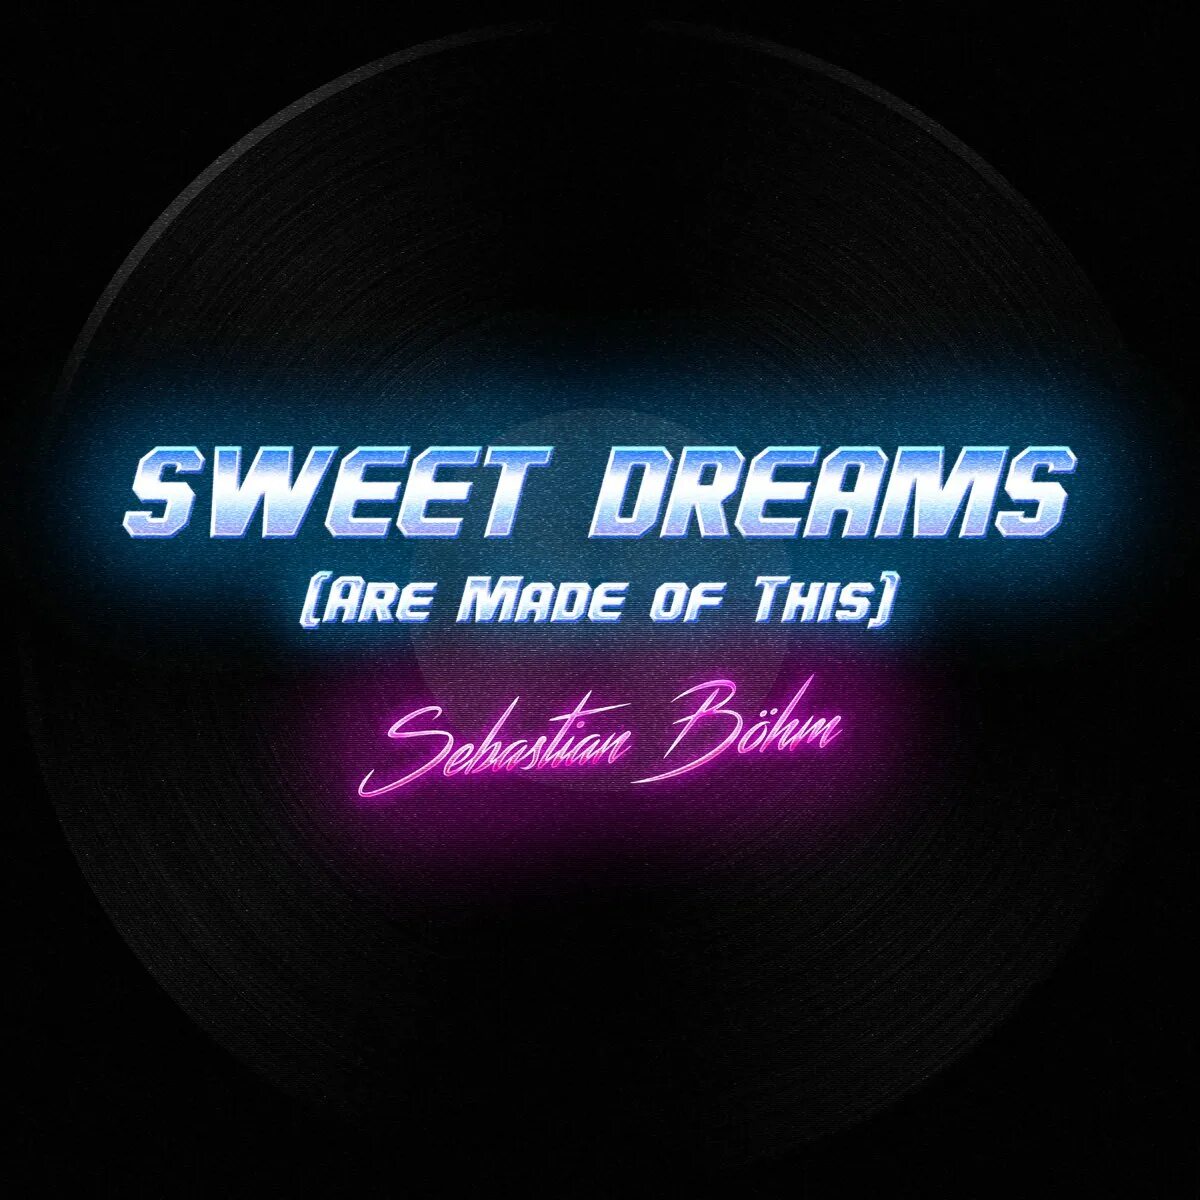 Включи sweet dream. Sweet Dreams трек. Sweet Dreams are made of this. Sweet Dreams обложка песни. Sweet Dreams (are made of this) album.